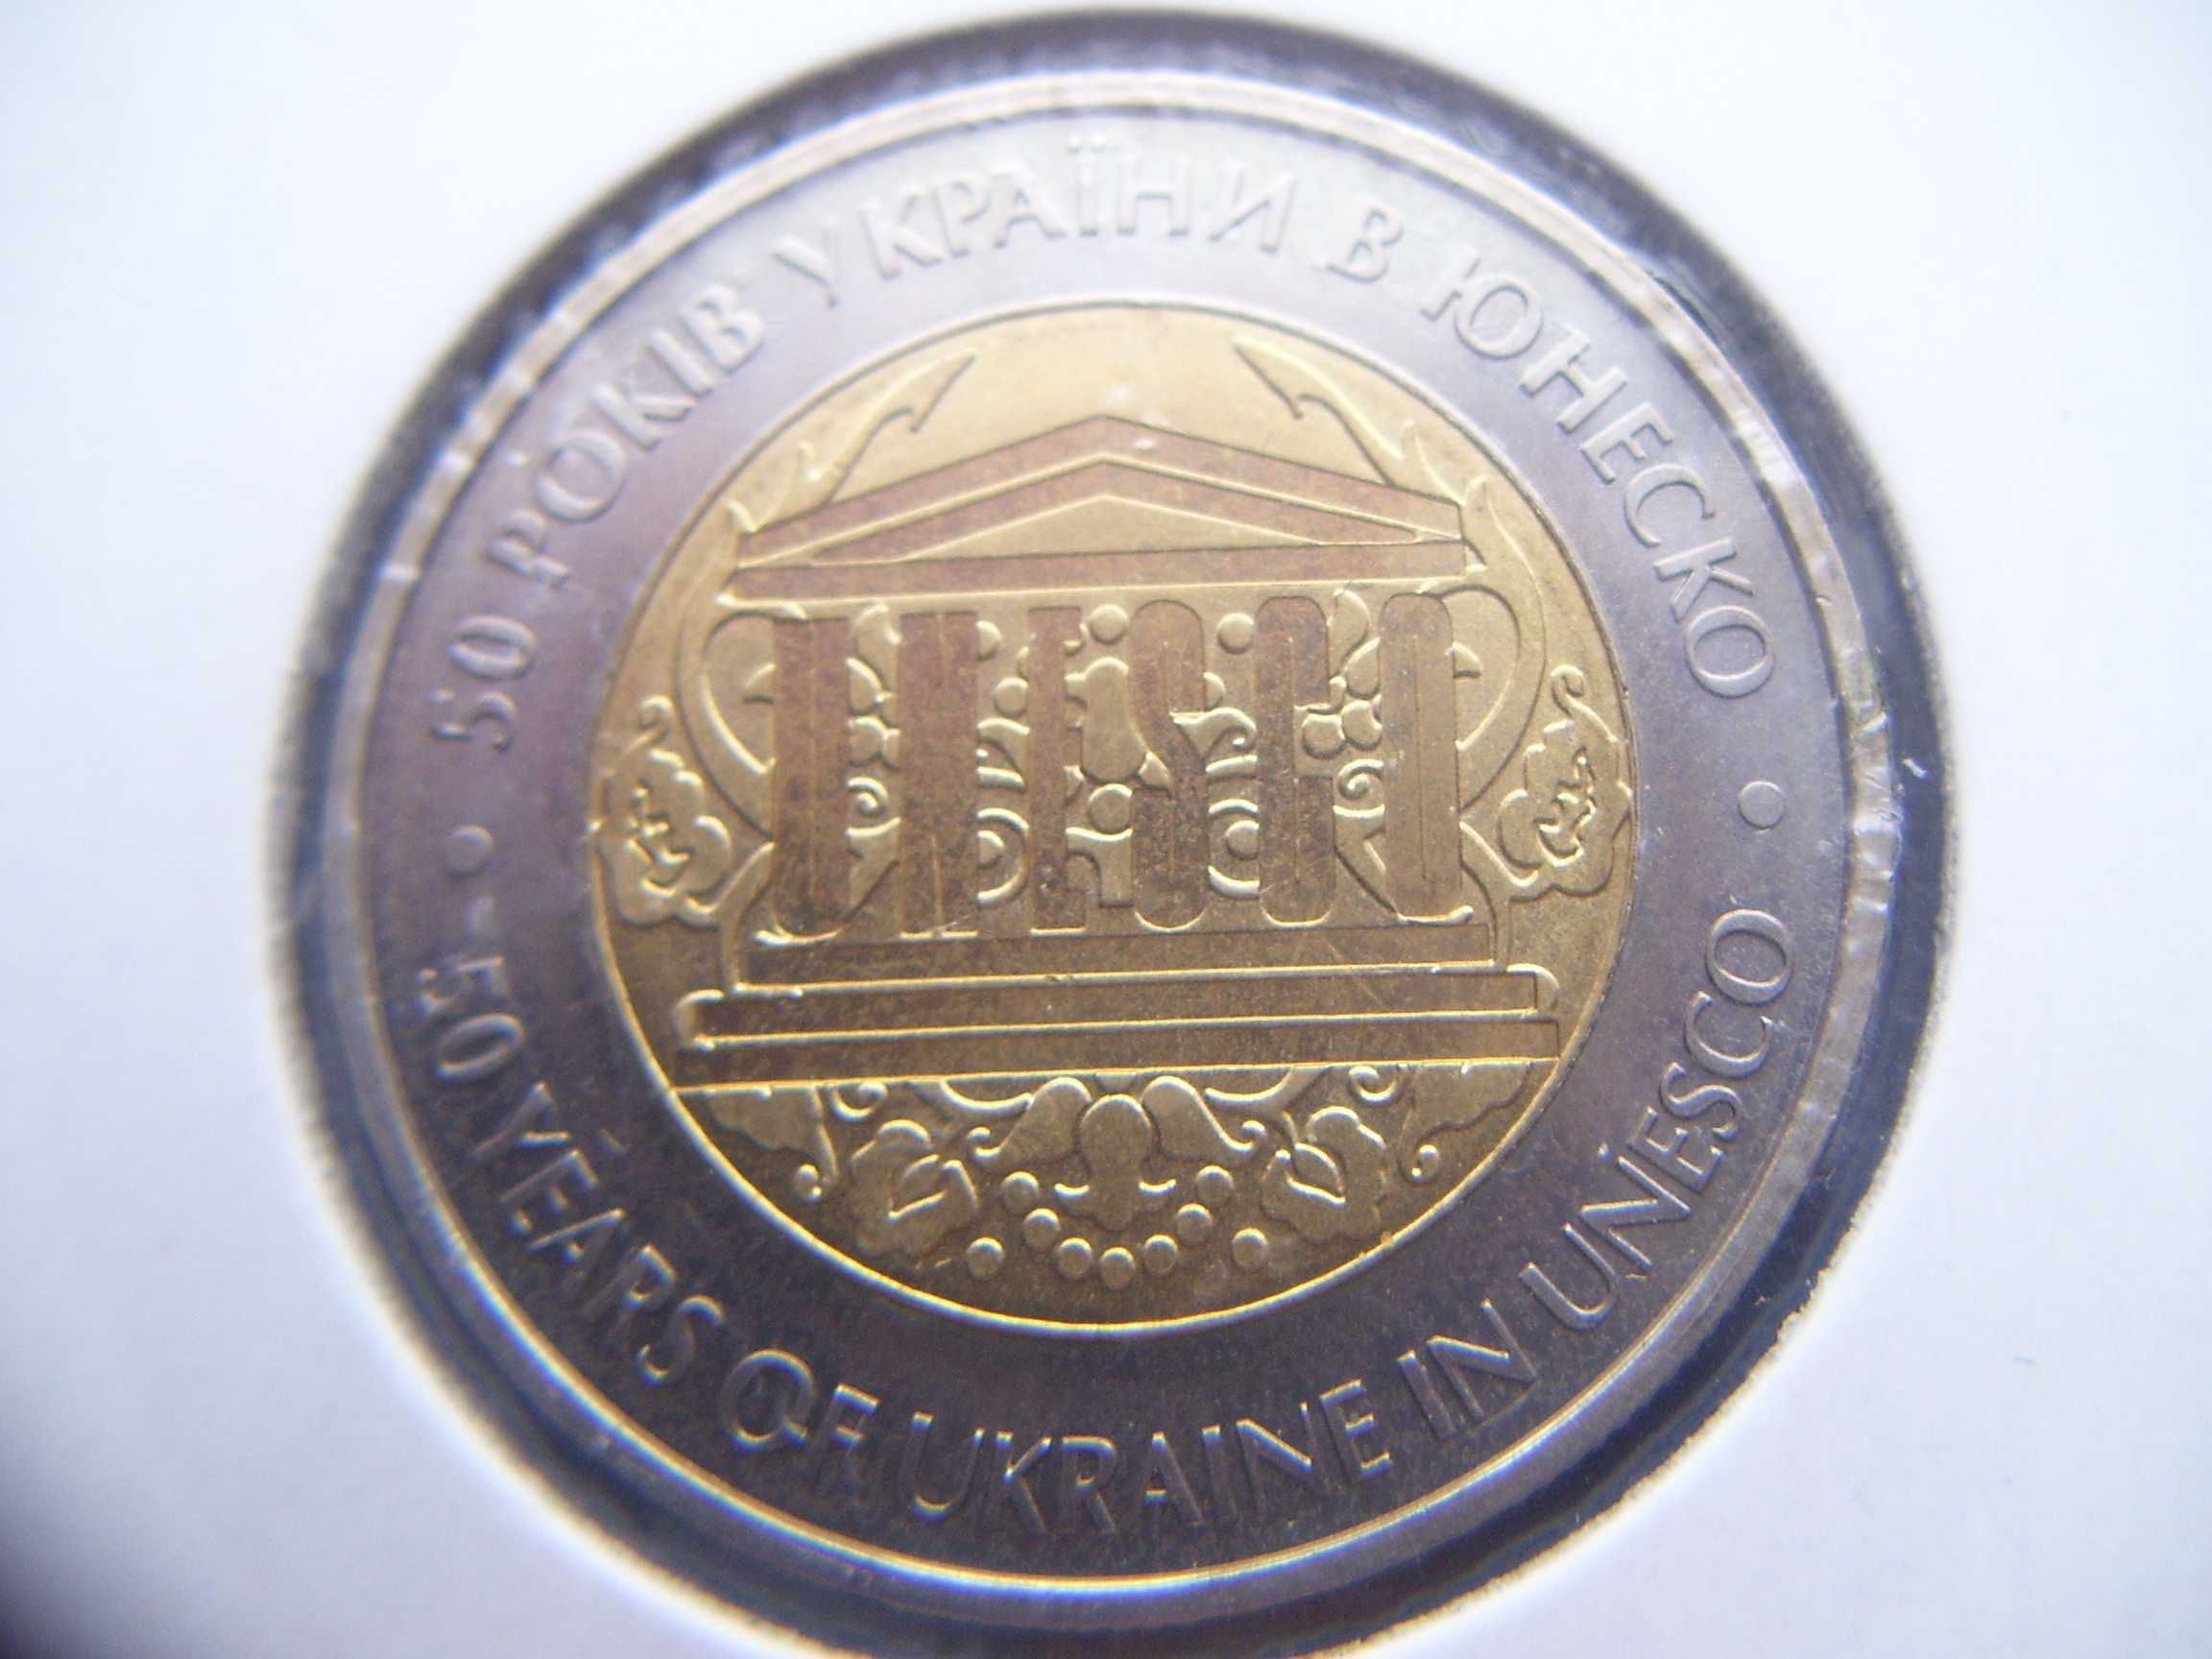 Stare monety 5 hrywien 2004 Ukraina piękna